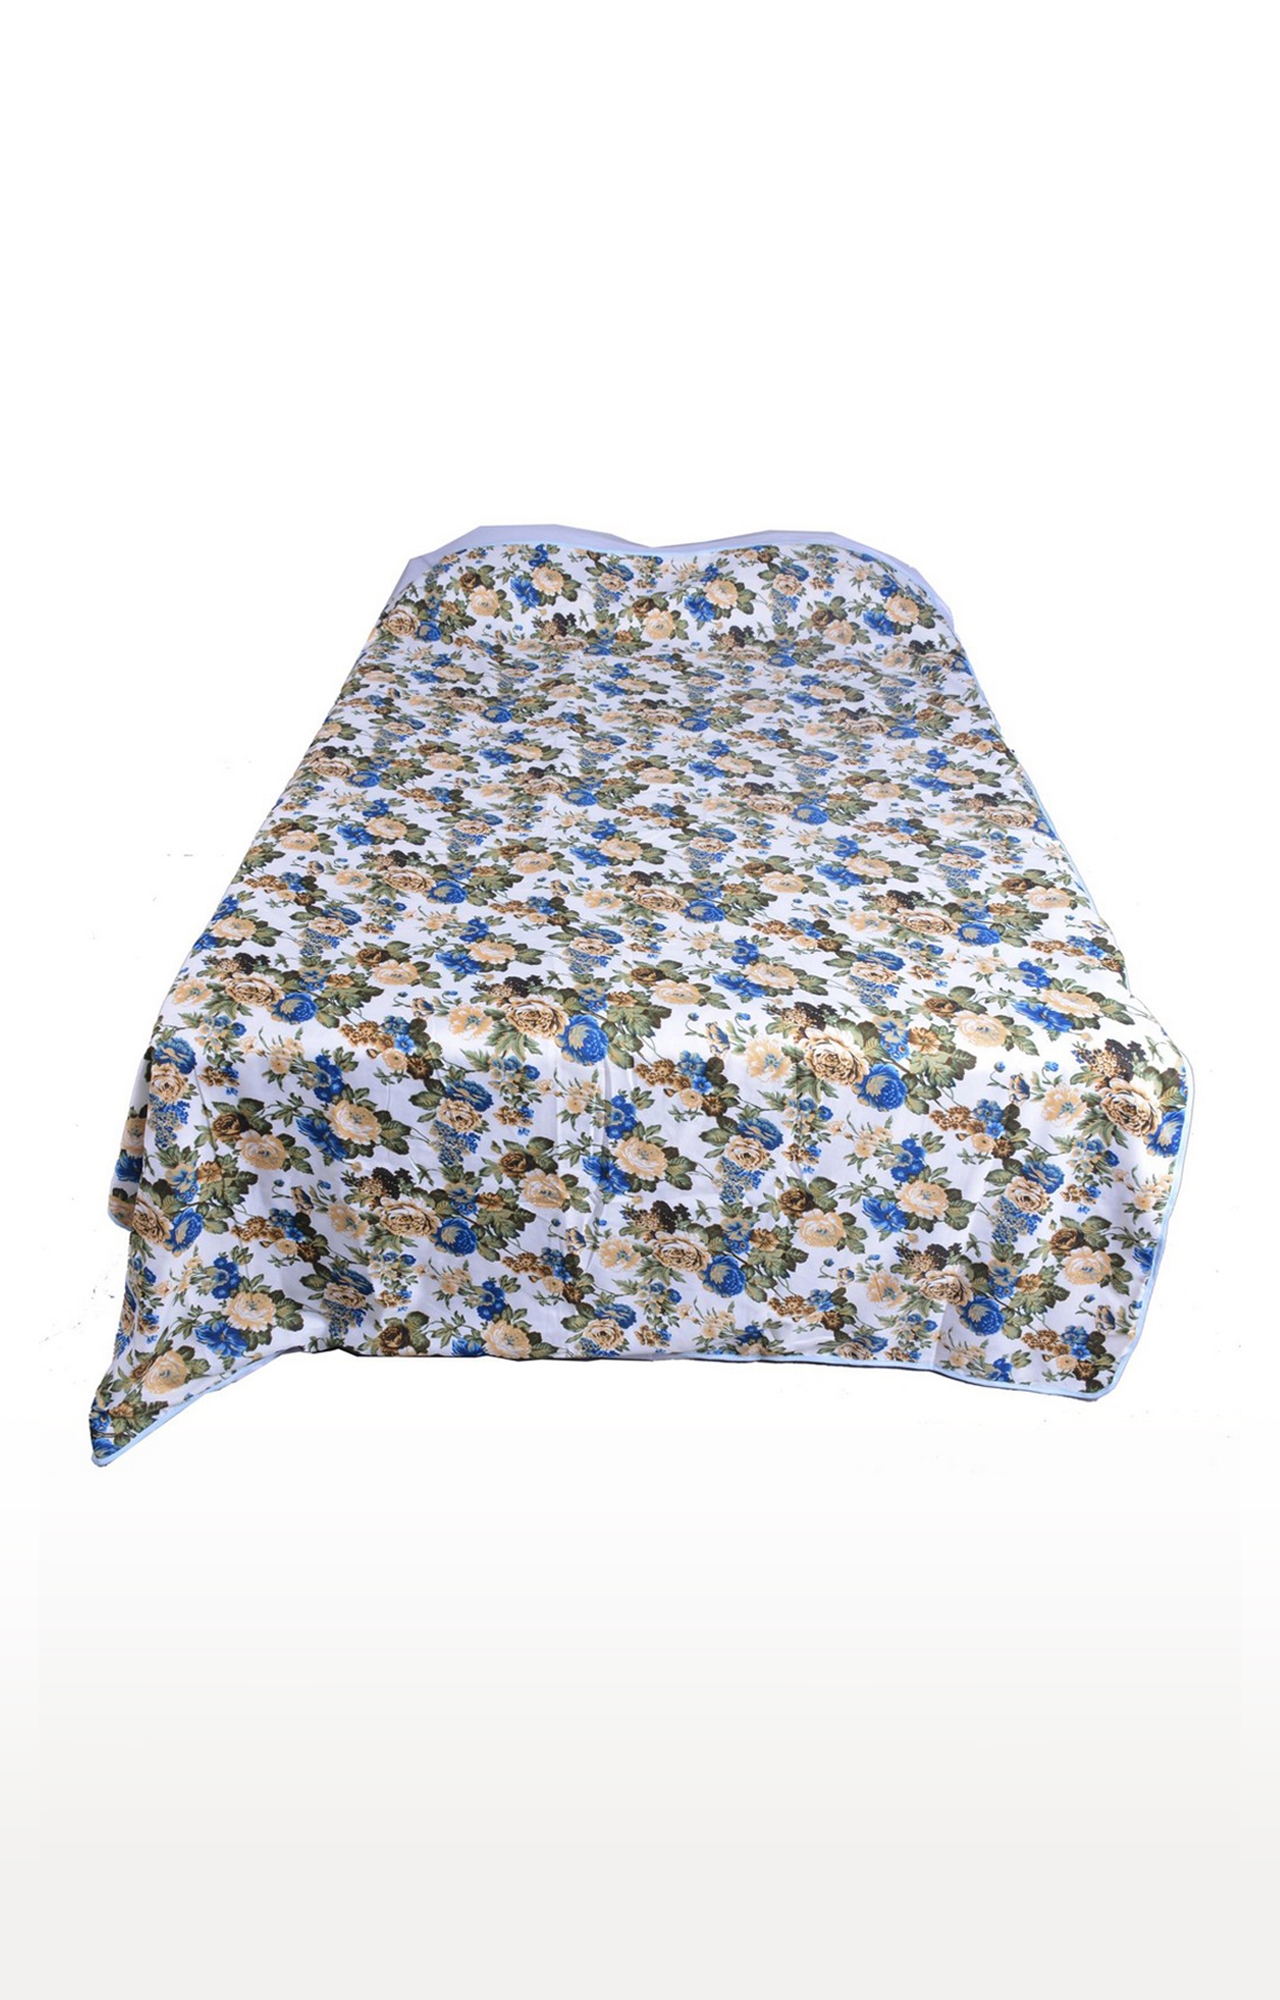 V Brown | Blue Garland Flower Printed Cotton 3 Layer Single Bed Quilt Dohar